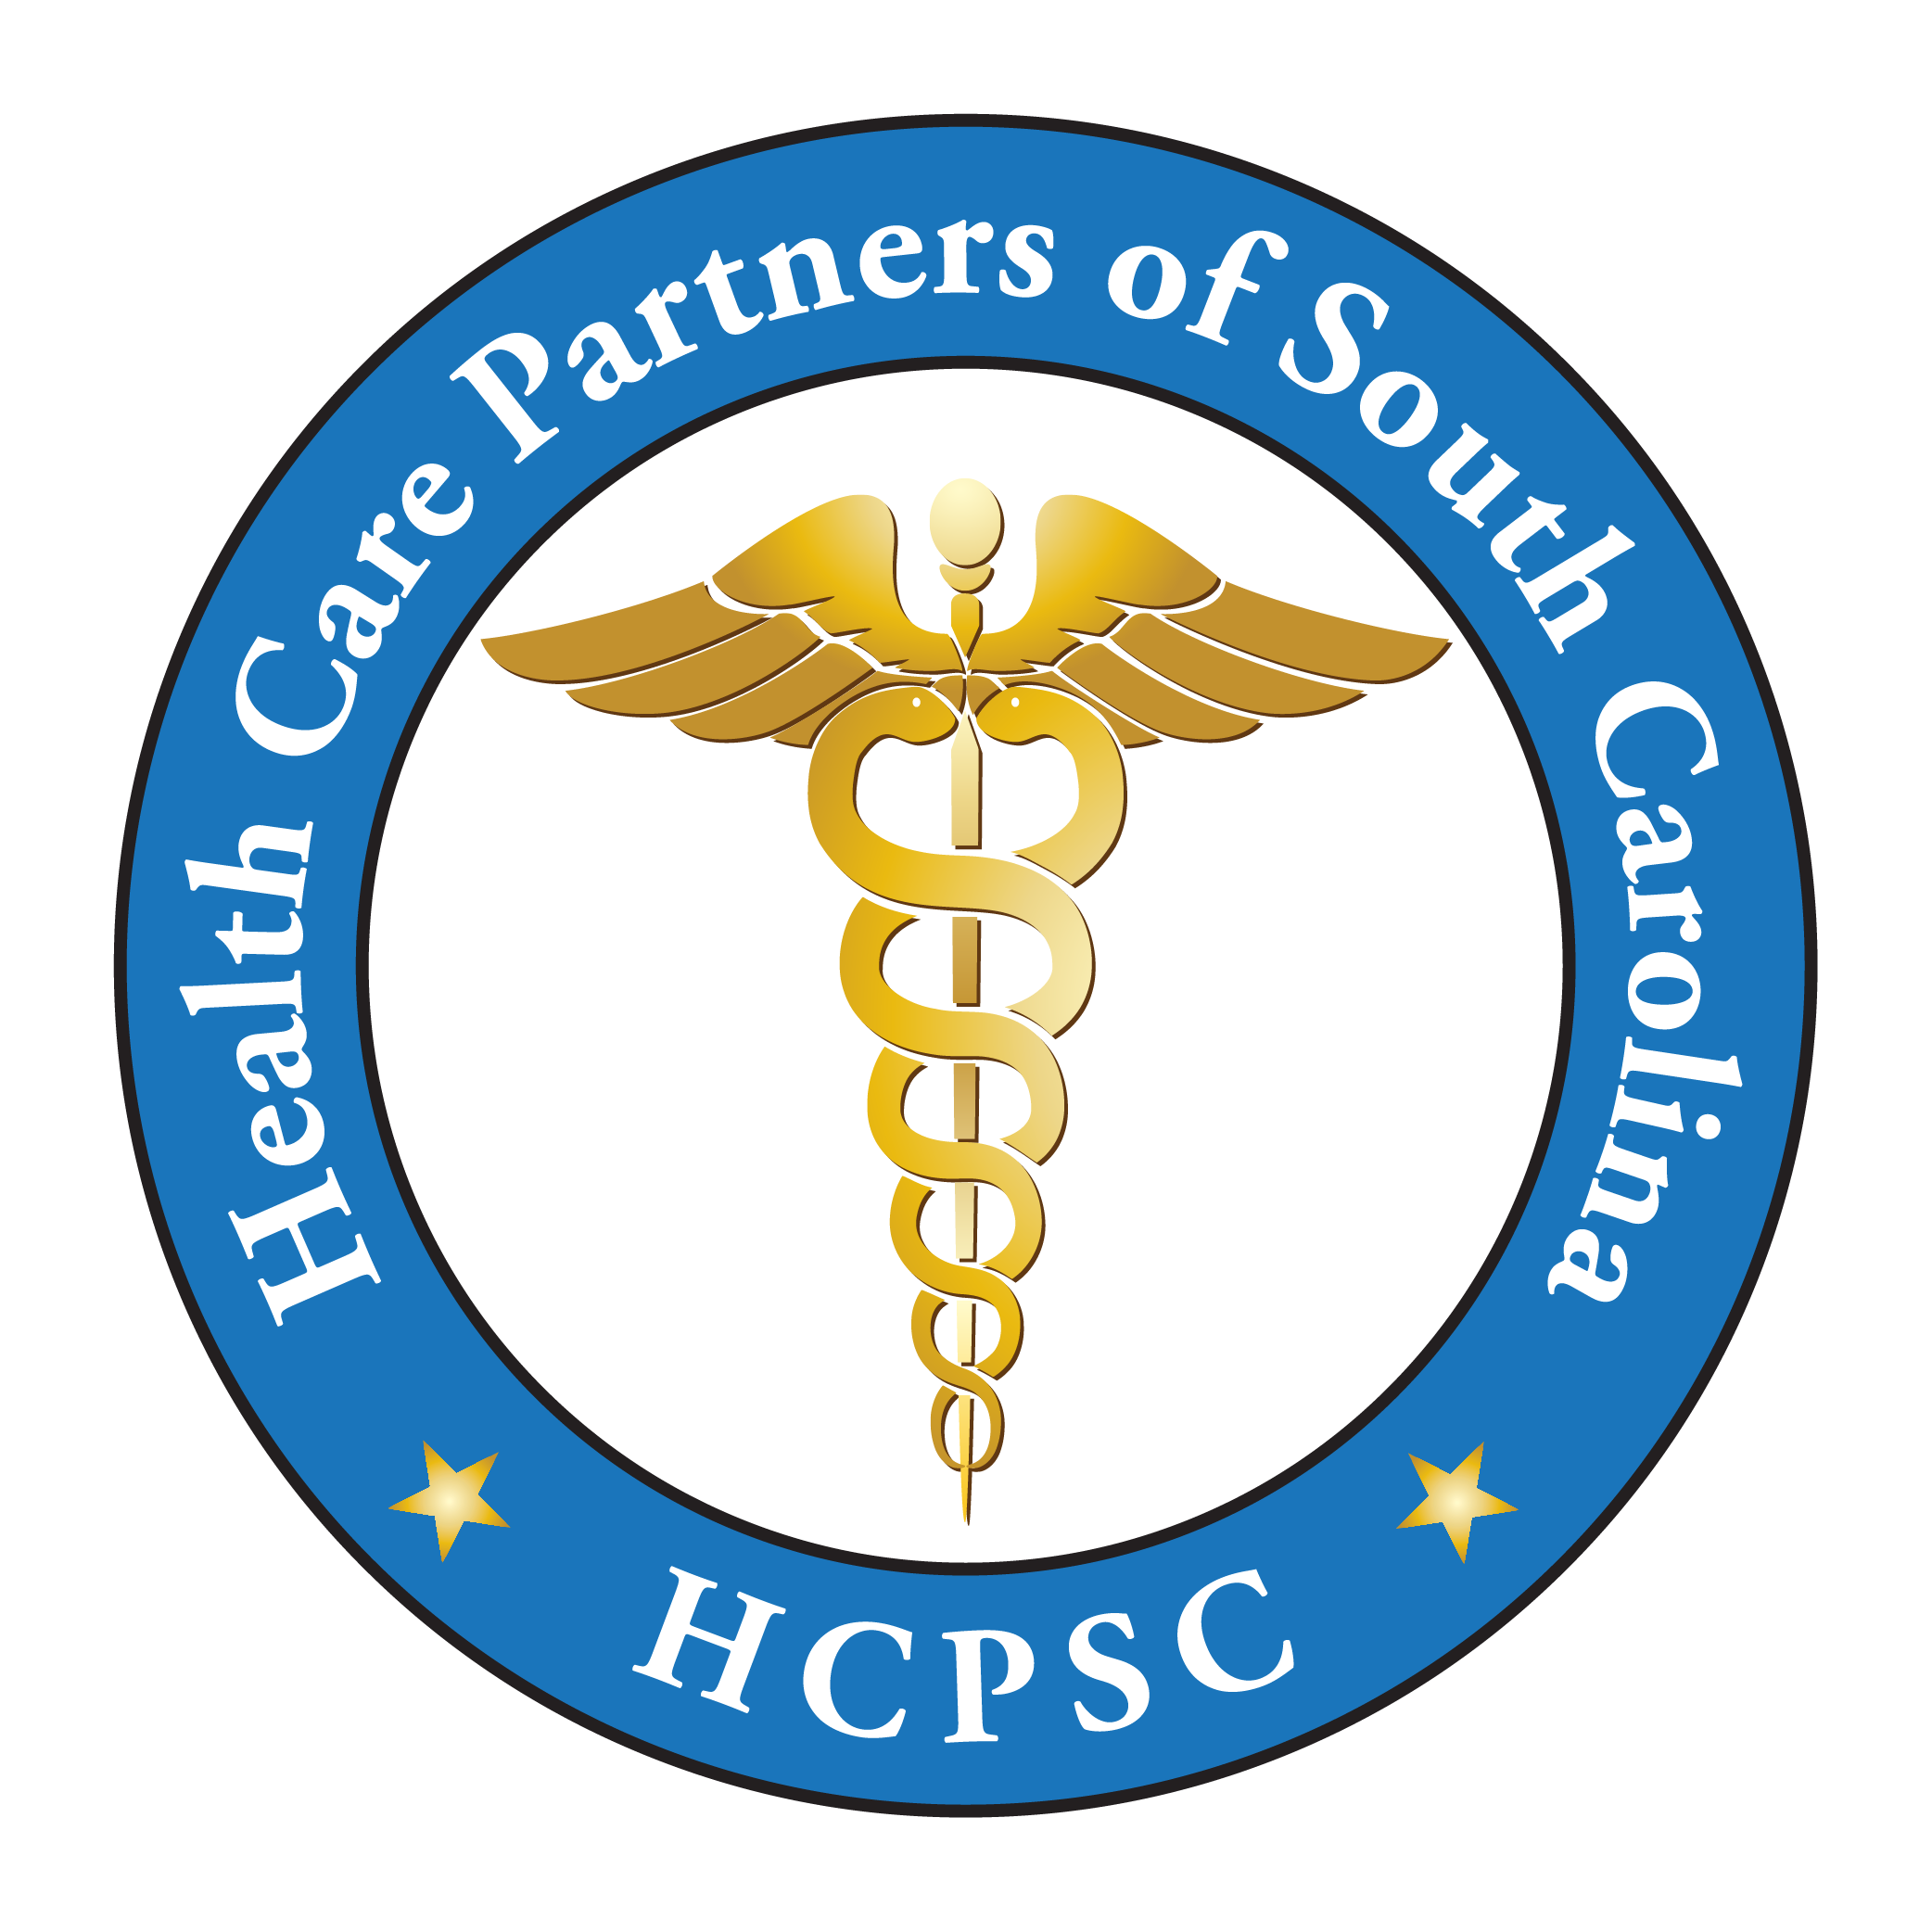 Health Care Partners of South Carolina